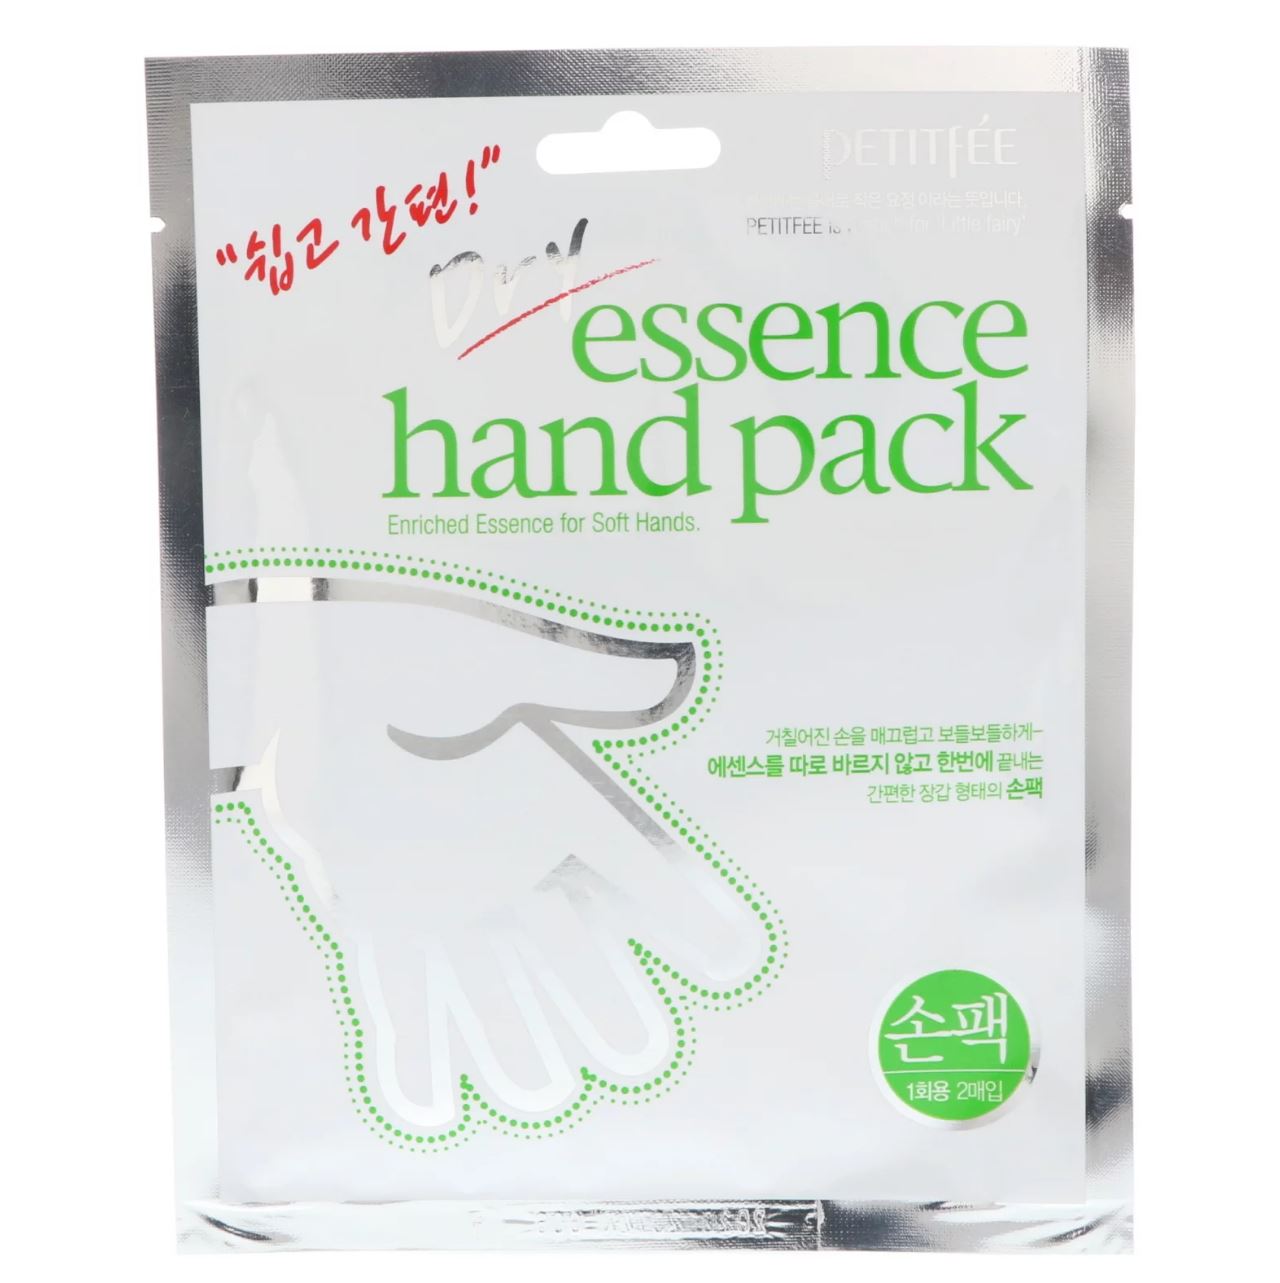 Увлажняющая маска для рук, Petitfee Dry Essence Hand Pack